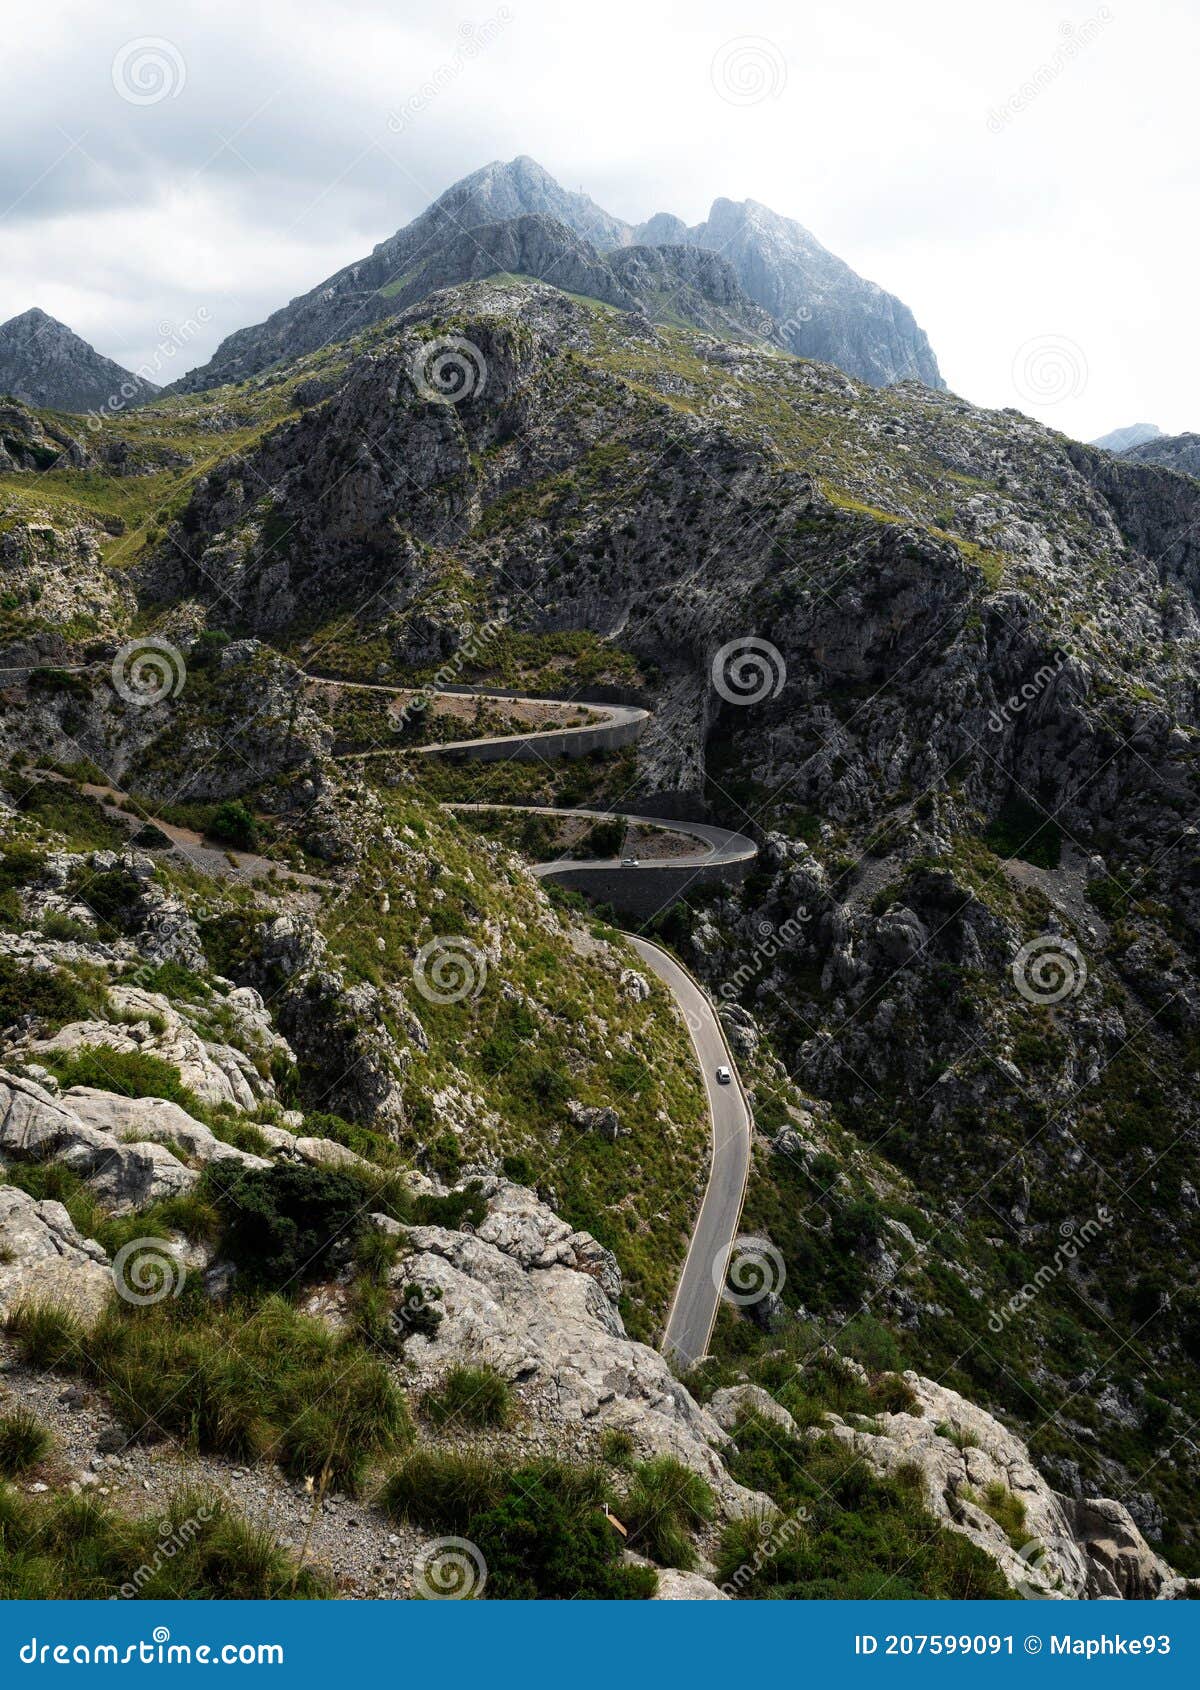 panorama view of winding curvy mountain road street sa corbata sa calobra mallorca balearic islands spain europe